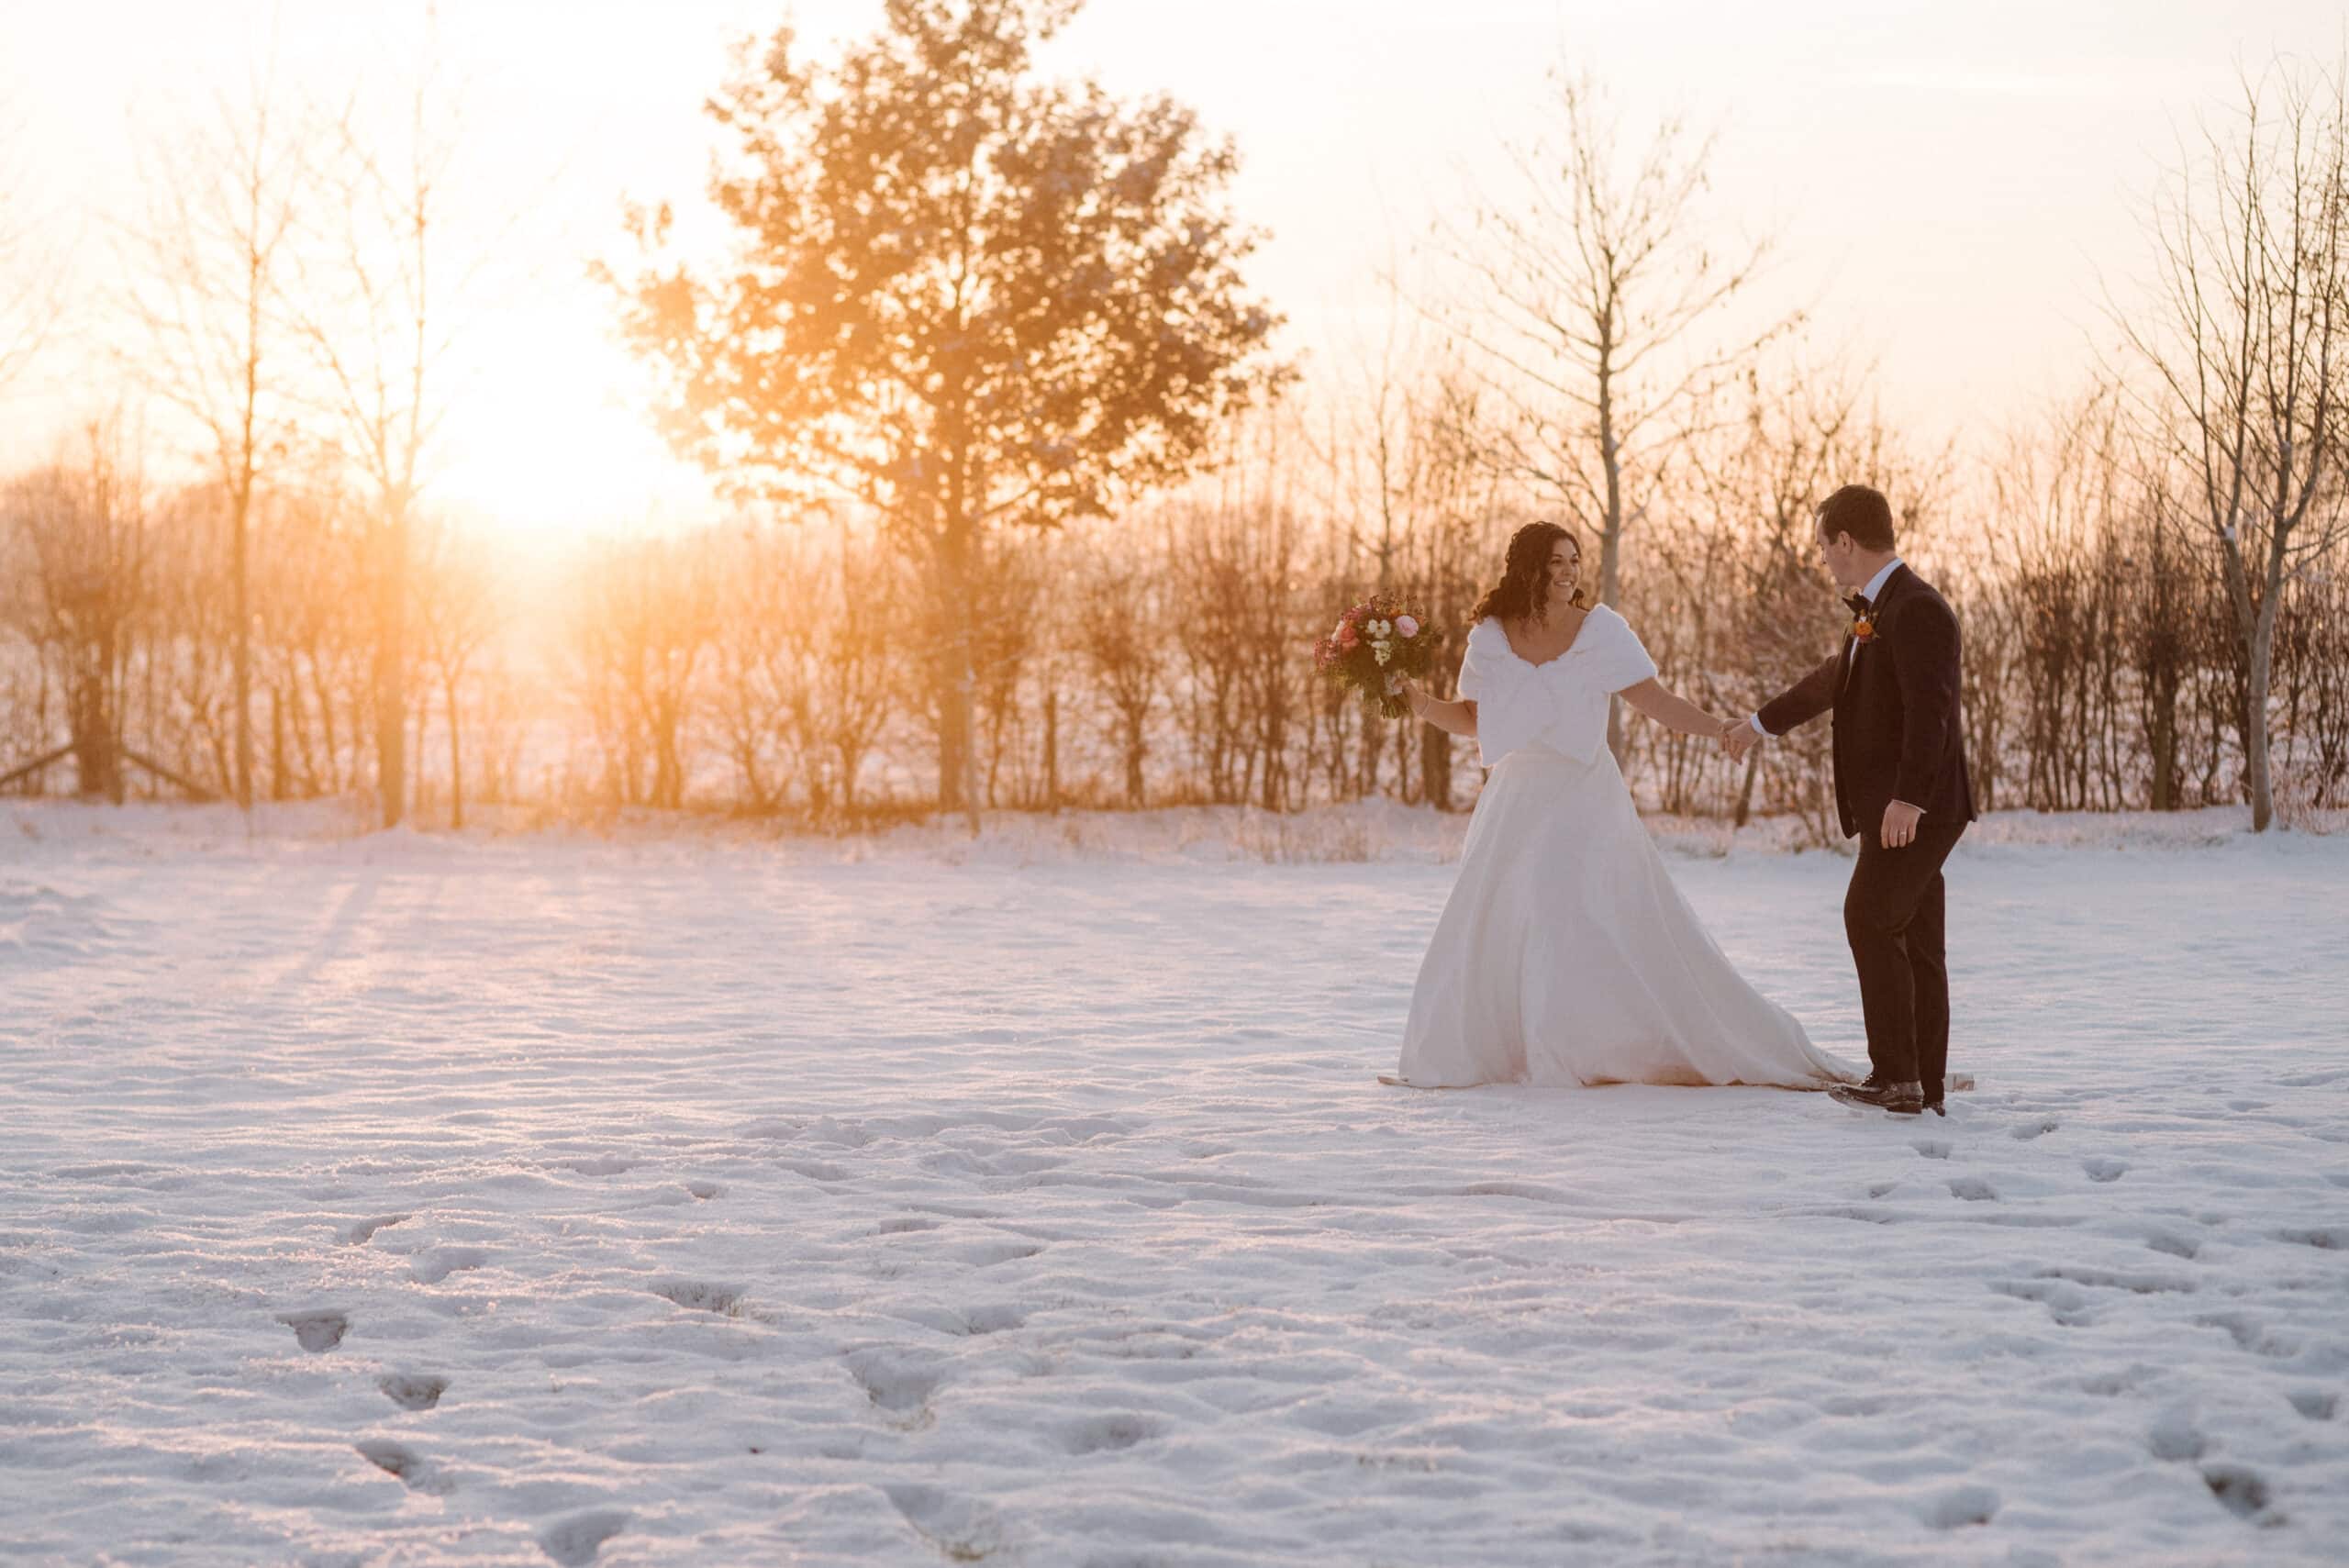 Snowy winter wedding at sunset